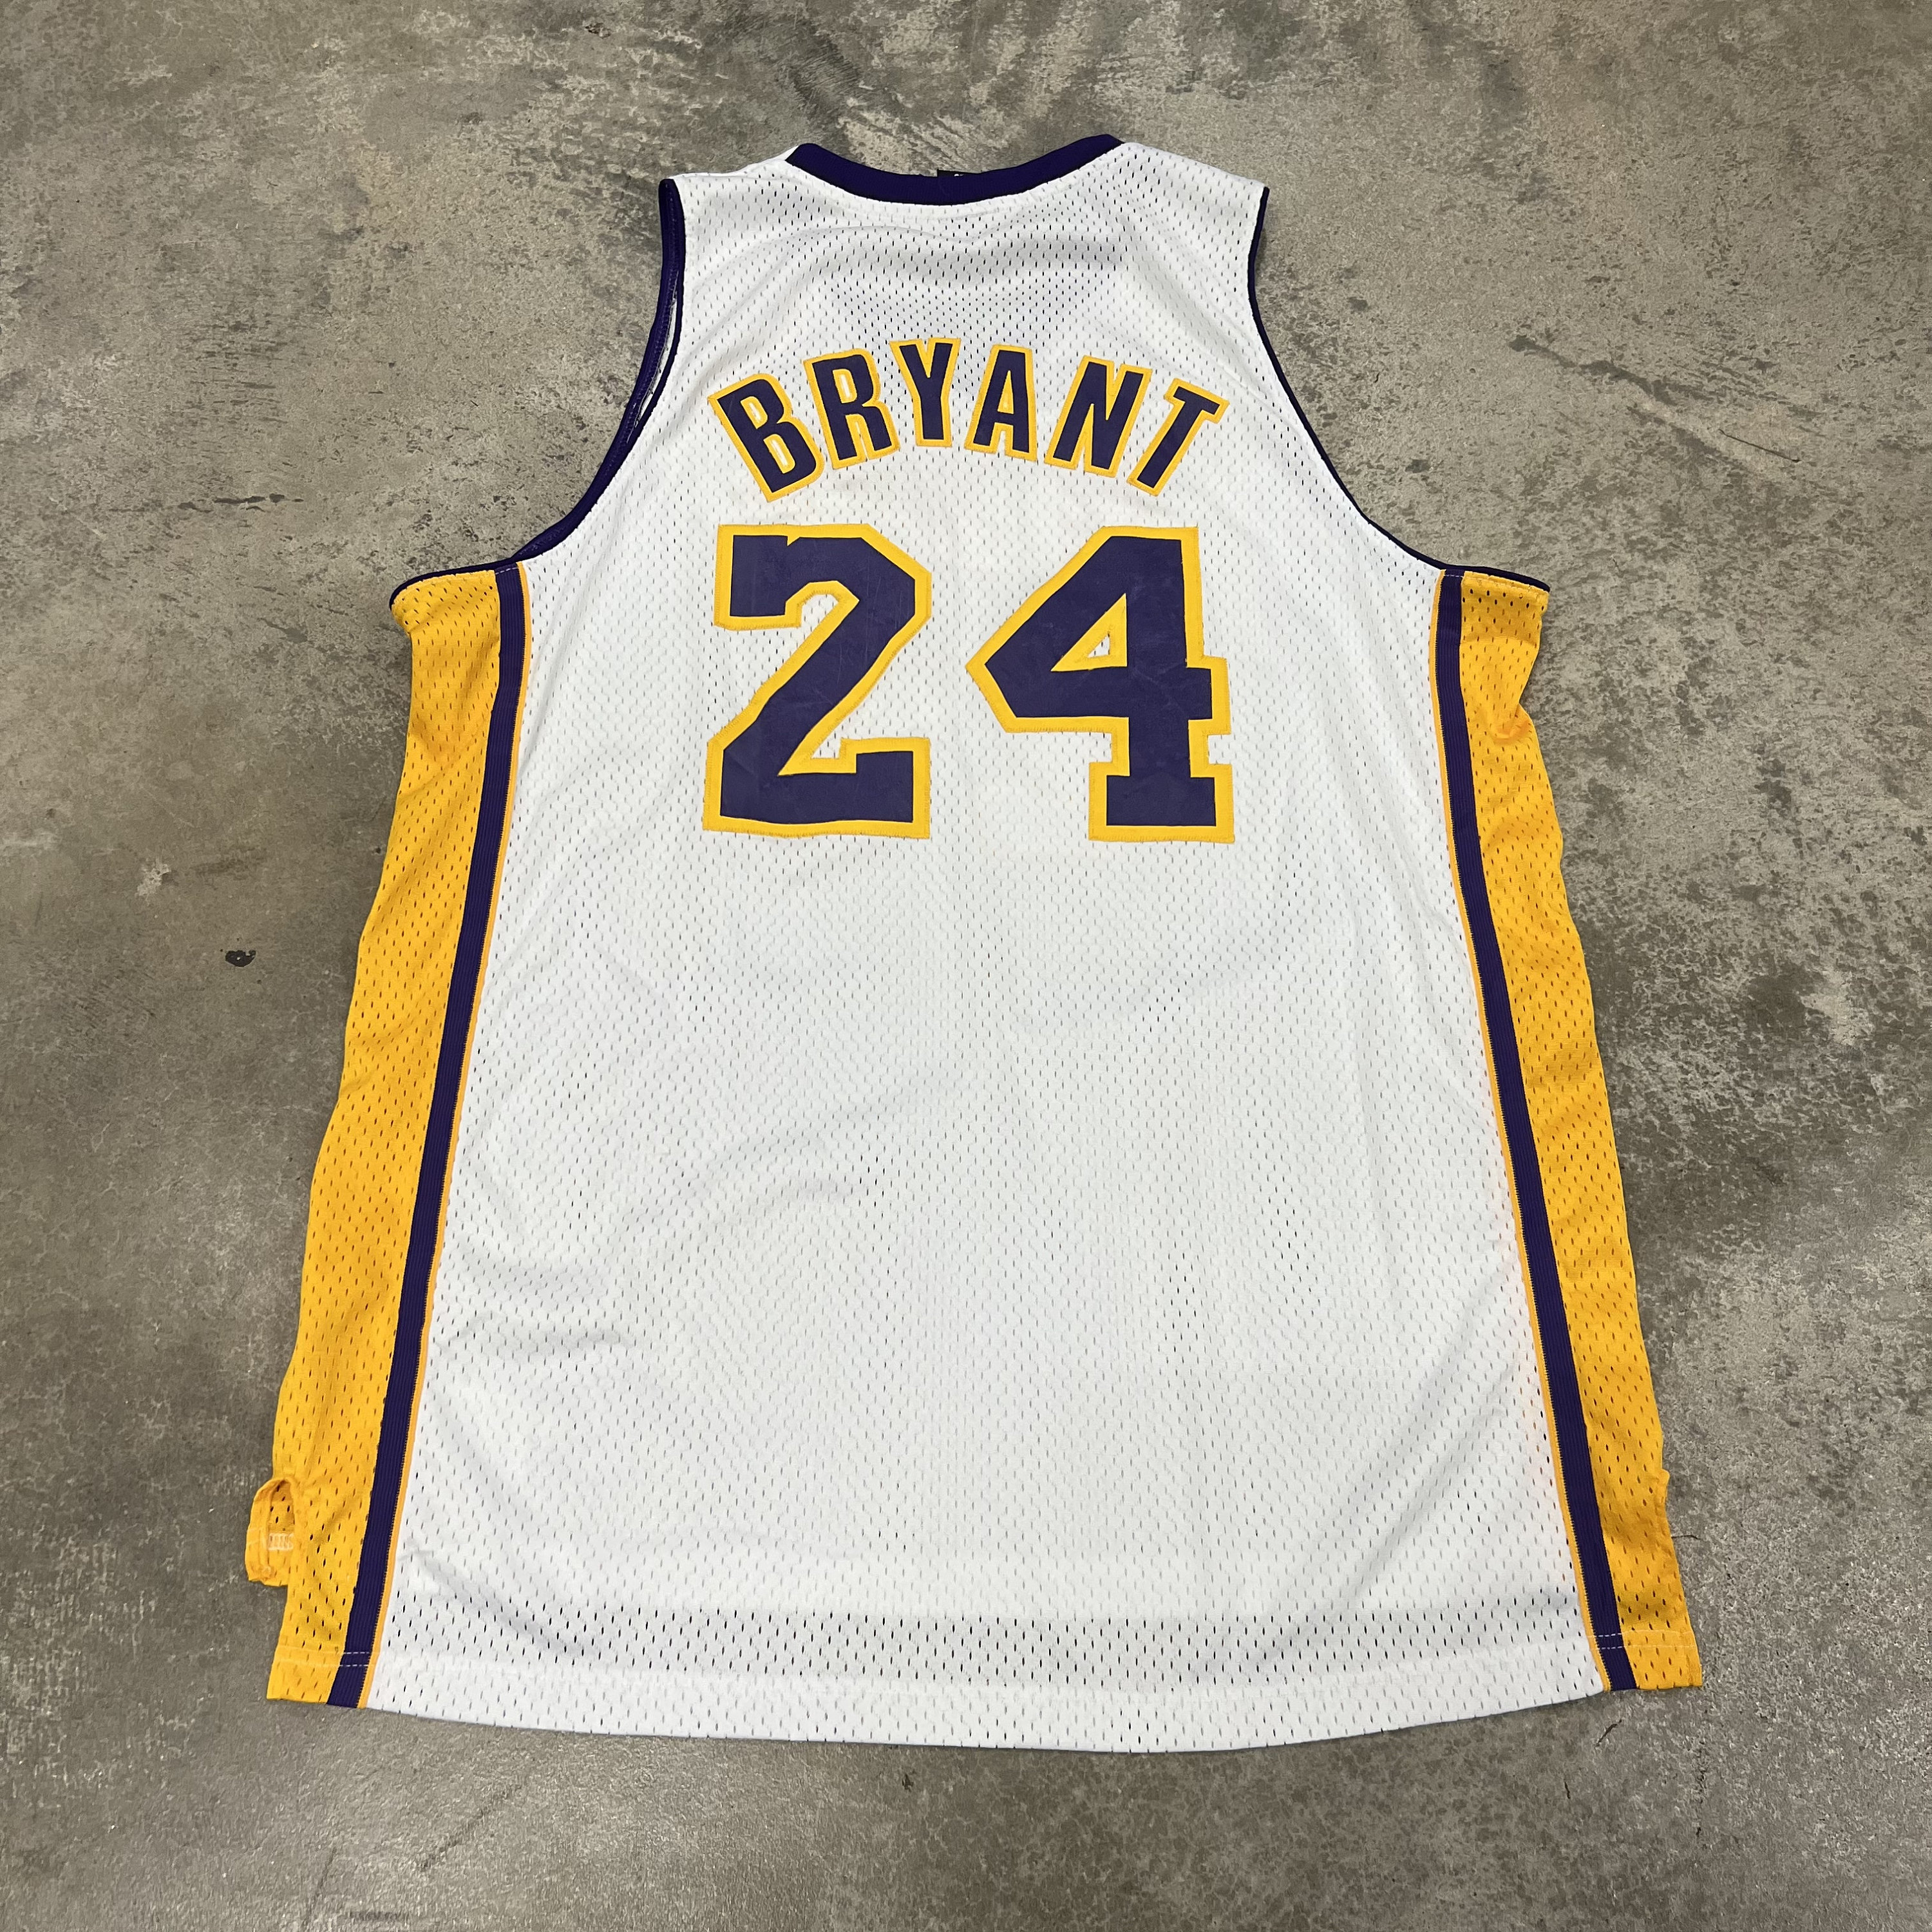 Kobe Bryant 2007-2008 Los Angeles Lakers Team 8x10 Photo